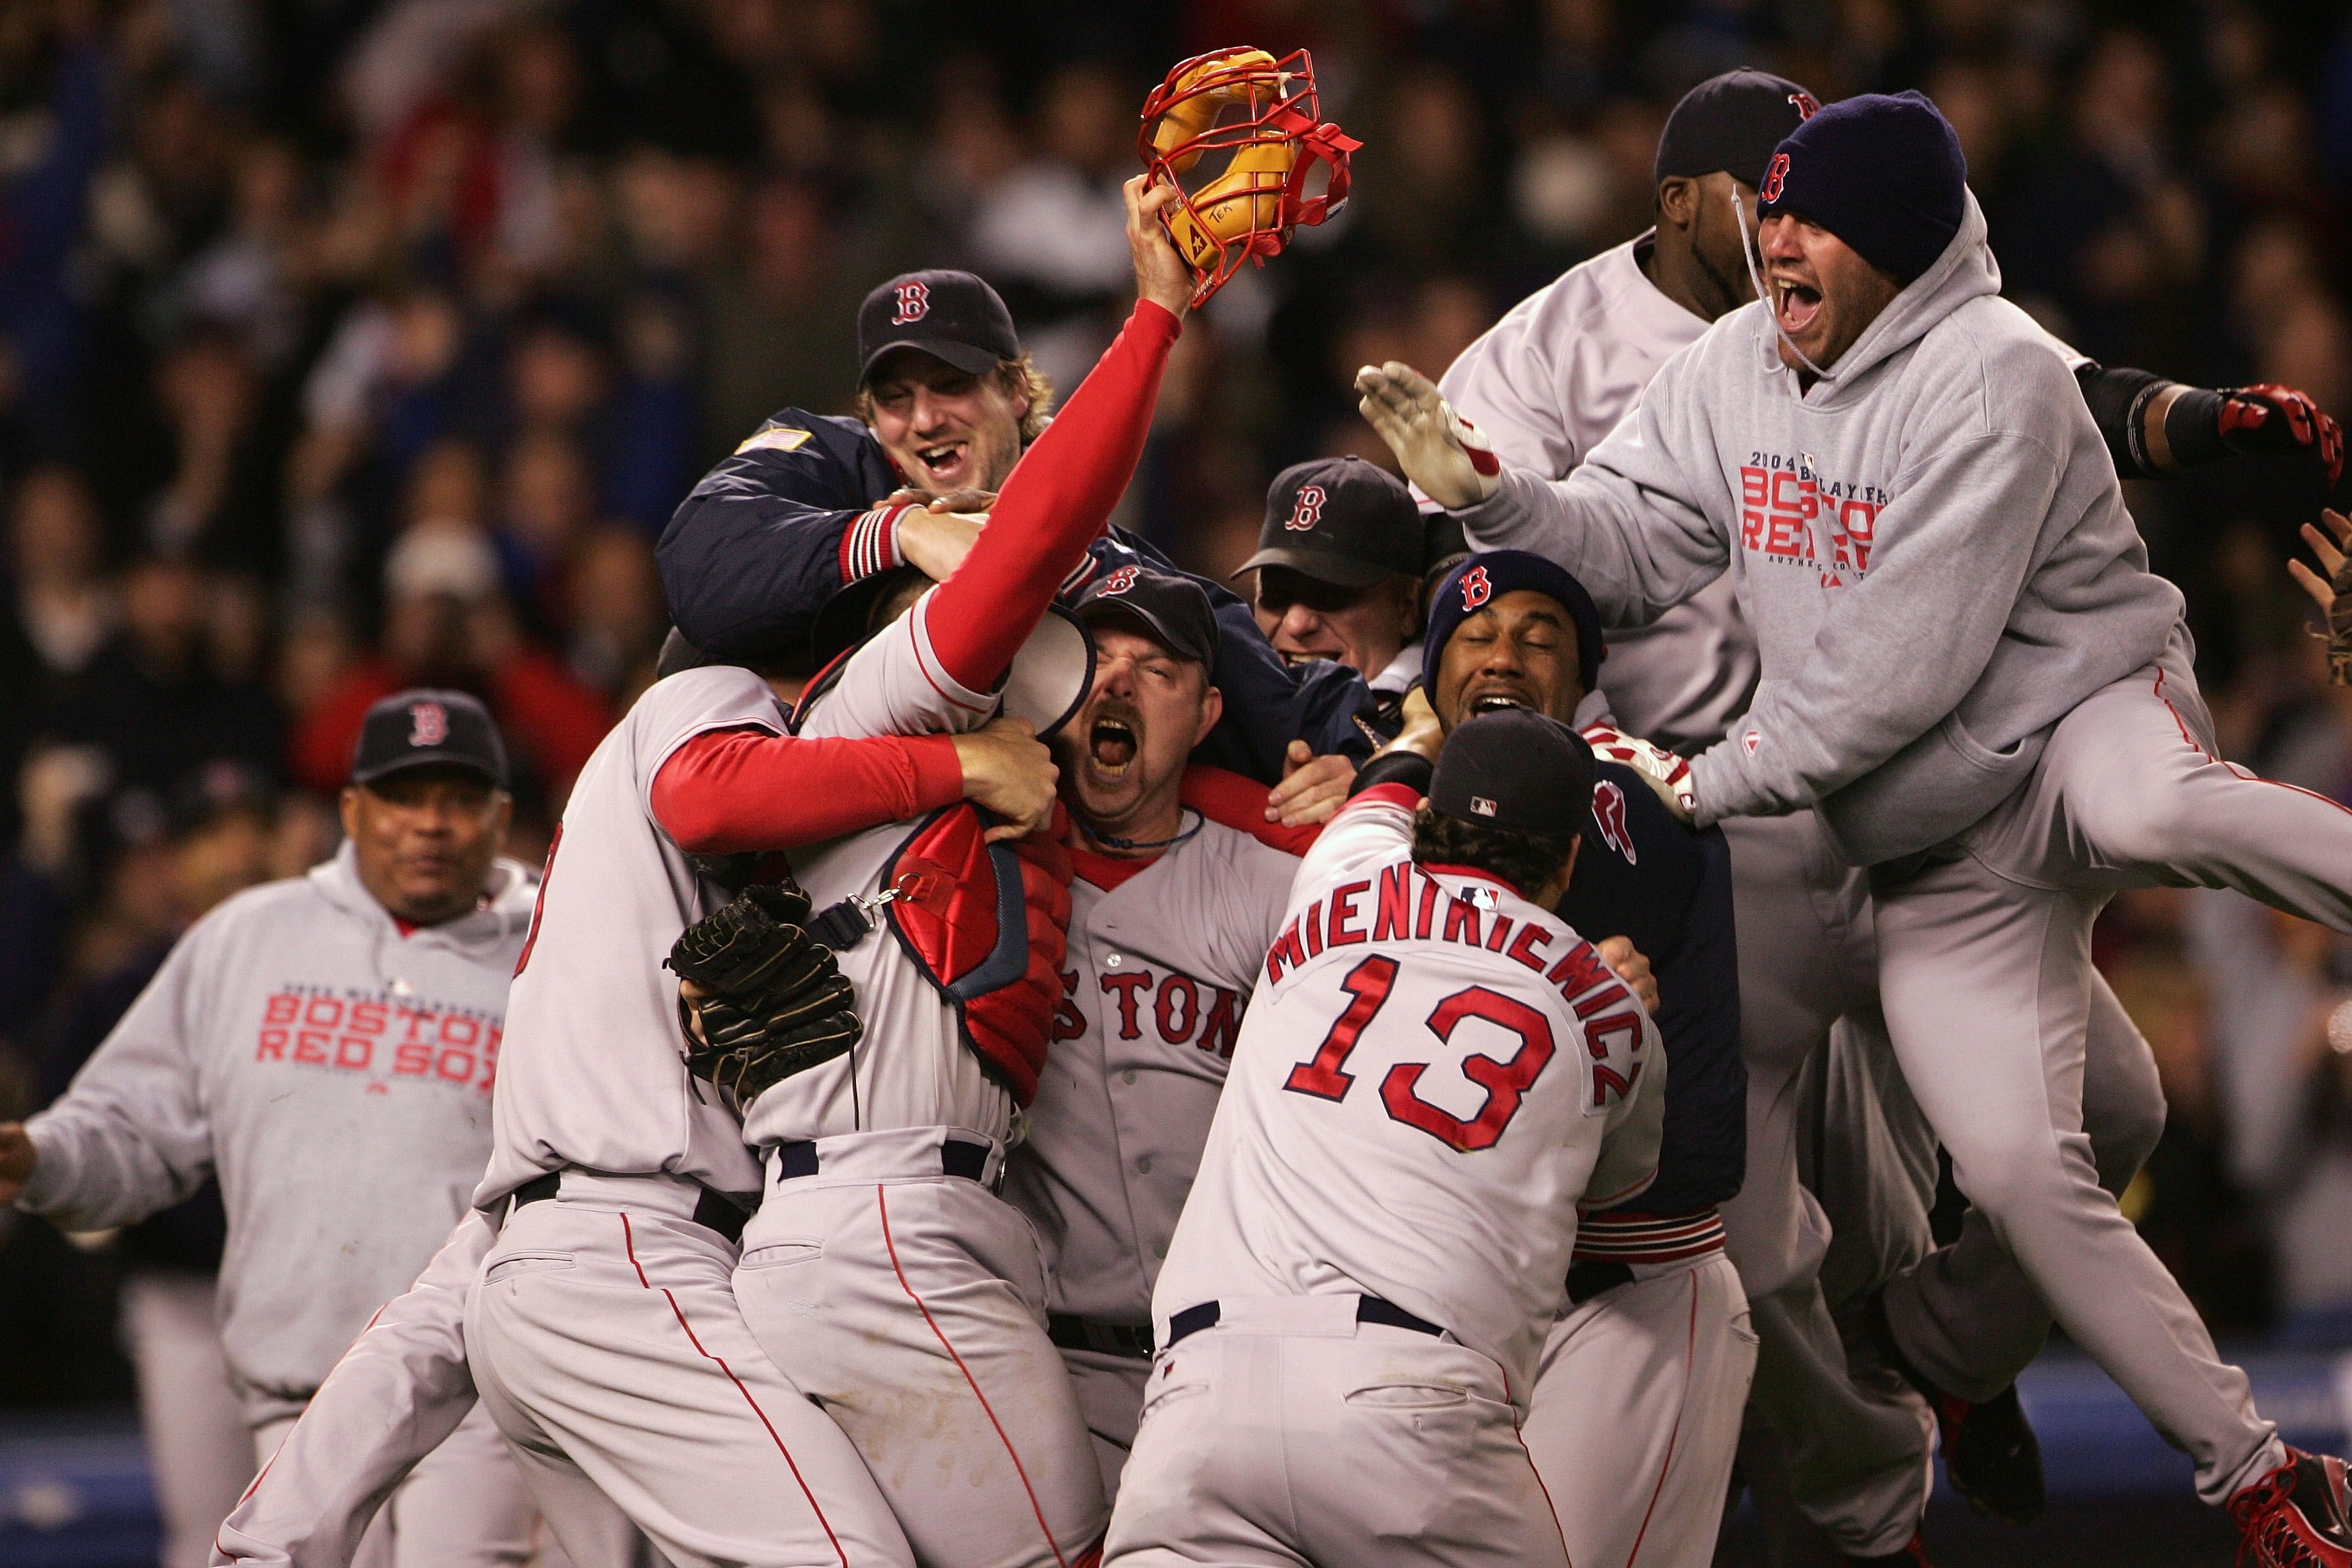 amplitude eksplicit partiskhed Boston Red Sox wins World Series in 2004 | CNN